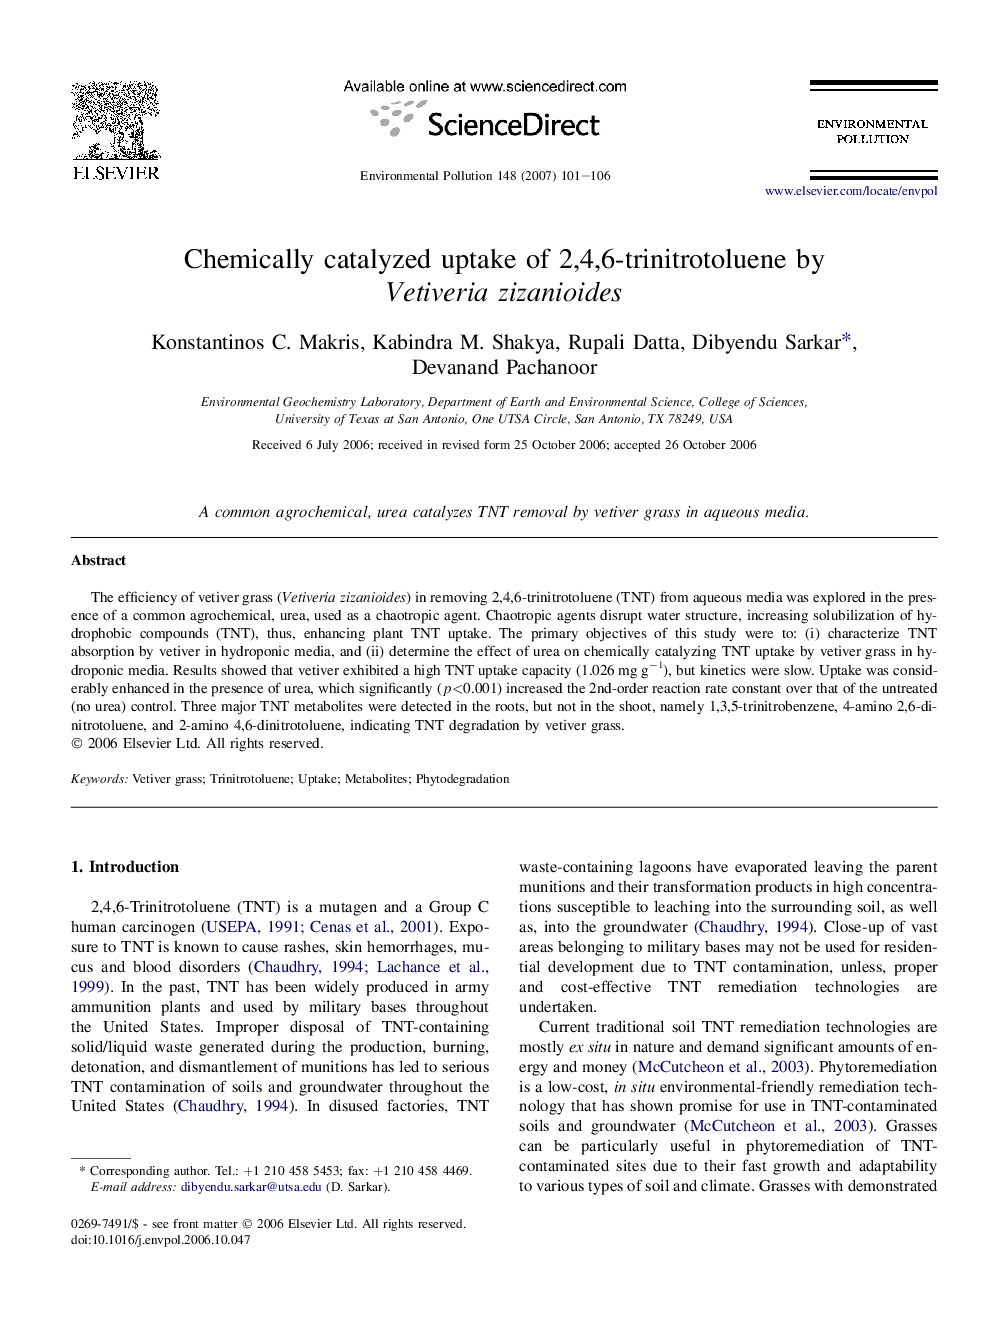 Chemically catalyzed uptake of 2,4,6-trinitrotoluene by Vetiveria zizanioides